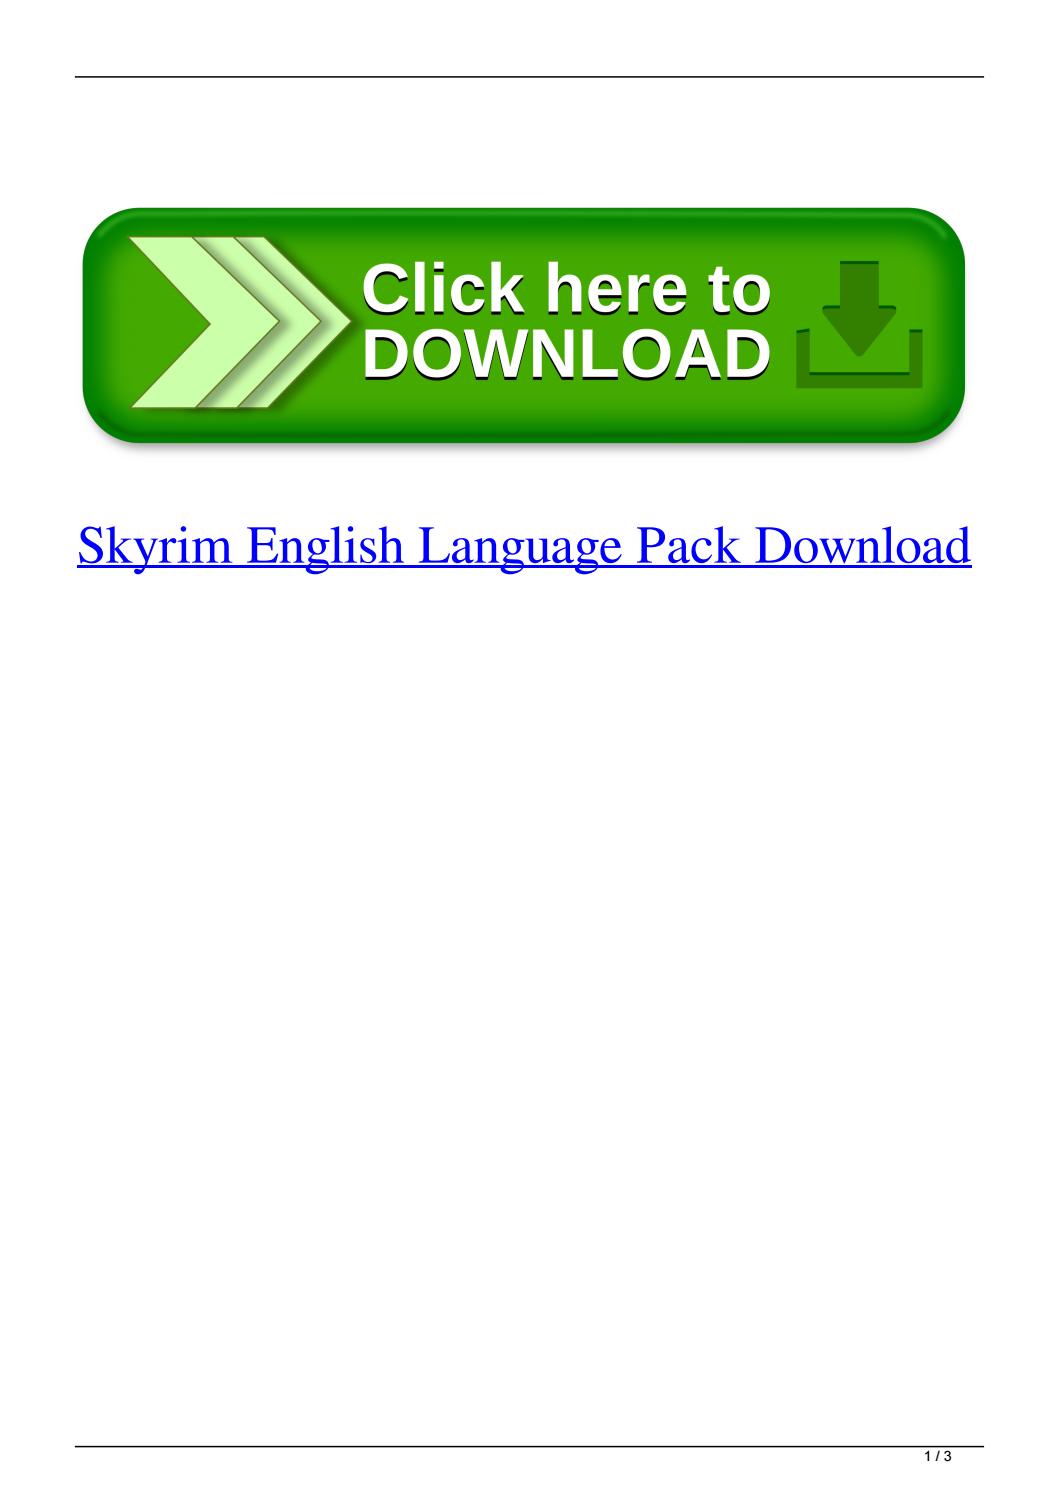 skyrim german language pack